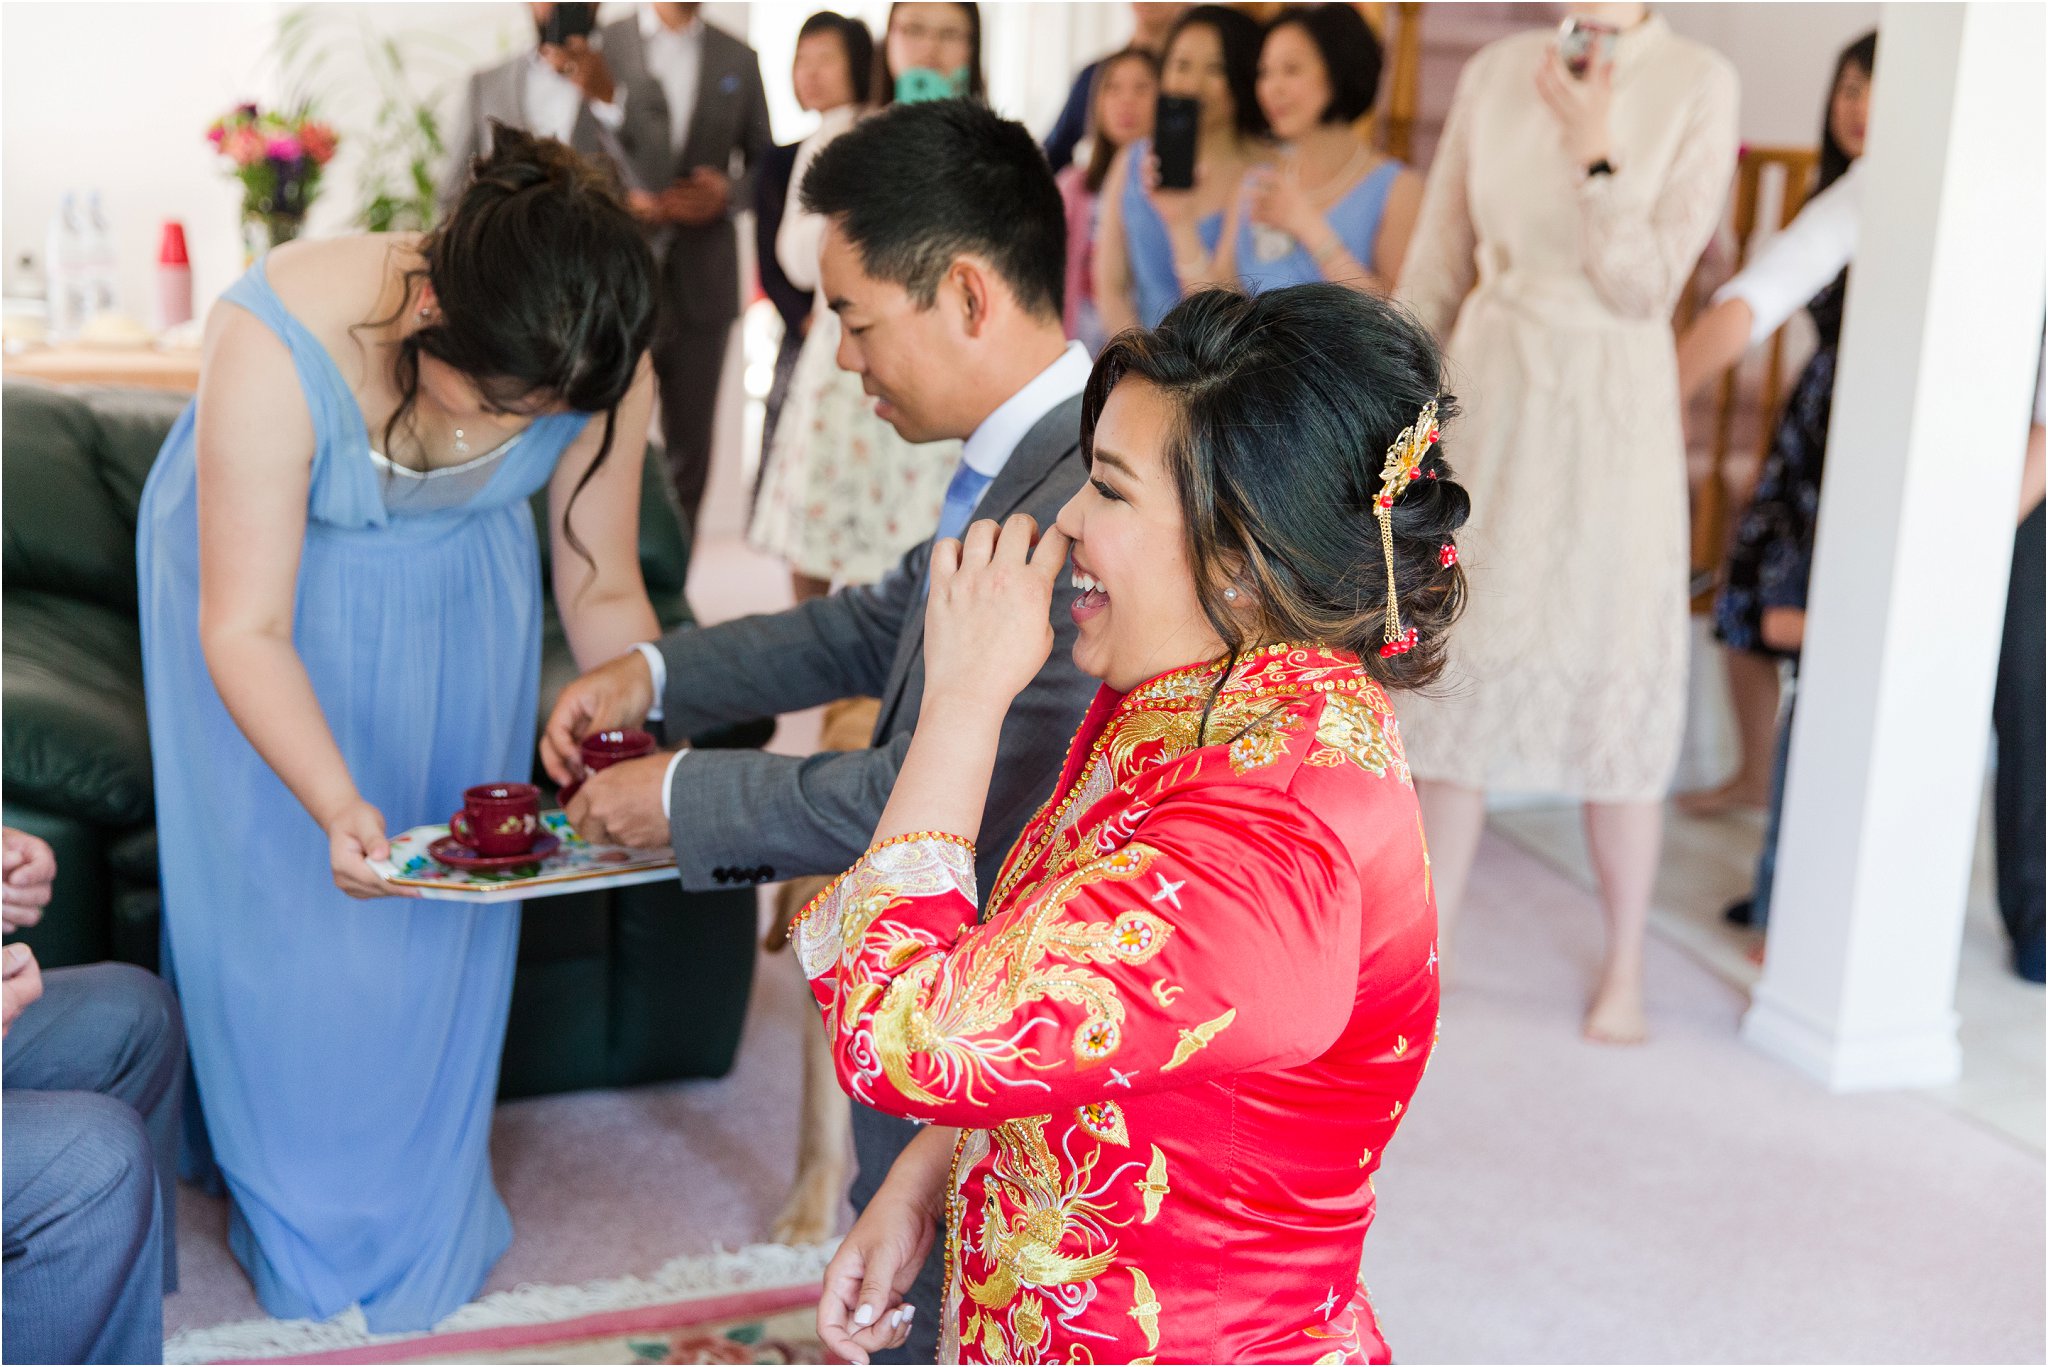 Windermere Golf Course wedding photos, edmonton wedding photographer, nc photography, chinese wedding, chinese tea ceremony, edmonton wedding photos